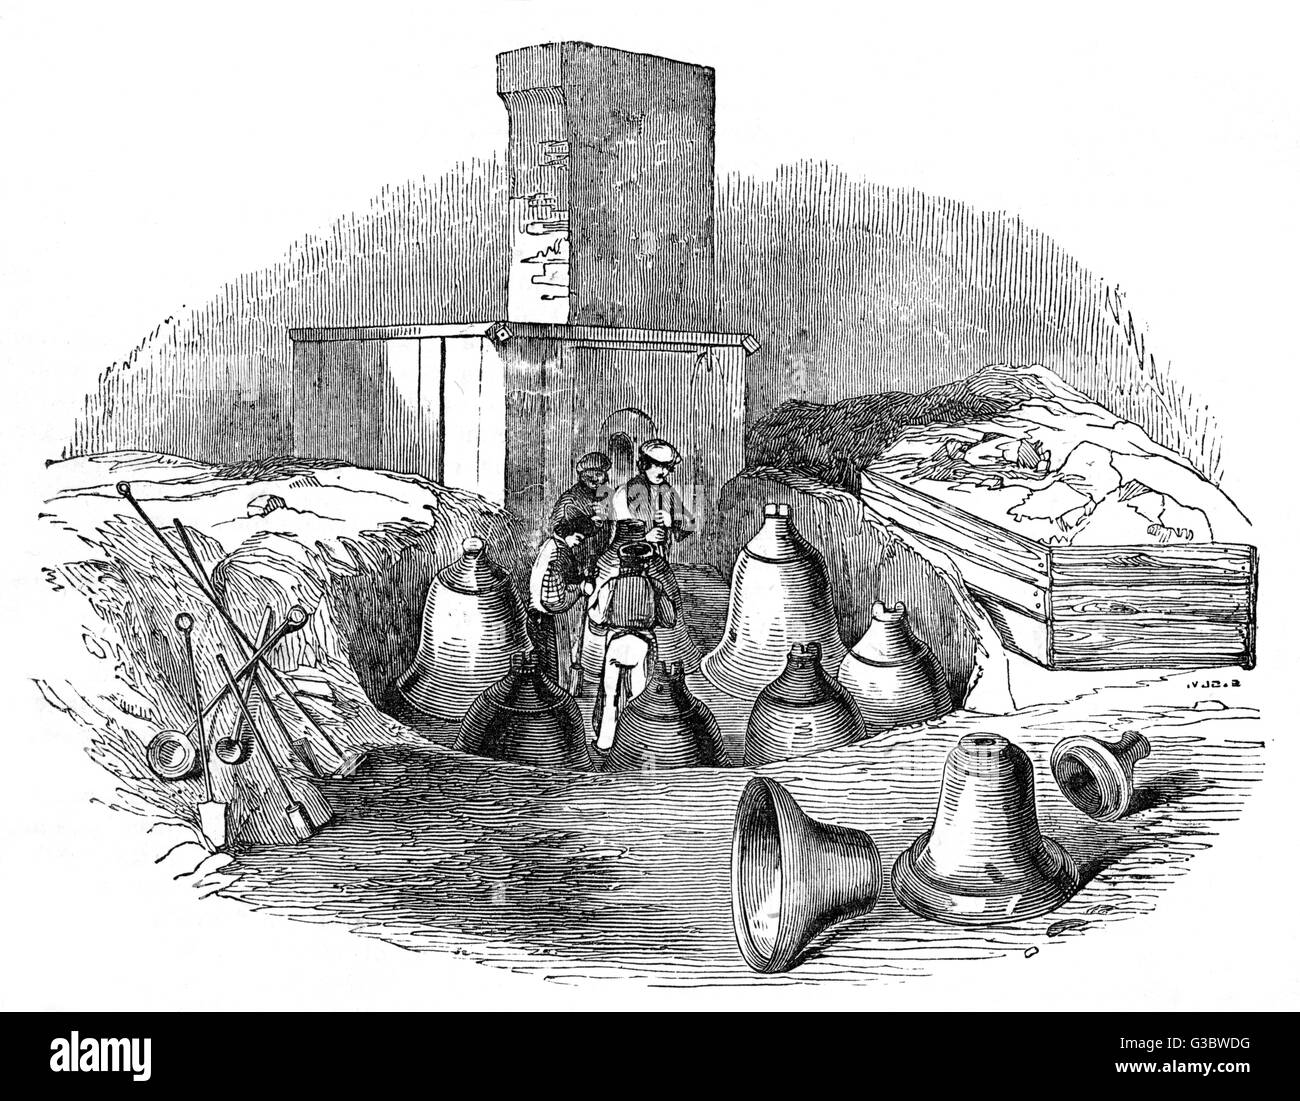 Un casting-pit di una fonderia di campane, c. 1830. Data: c. 1830 Foto Stock